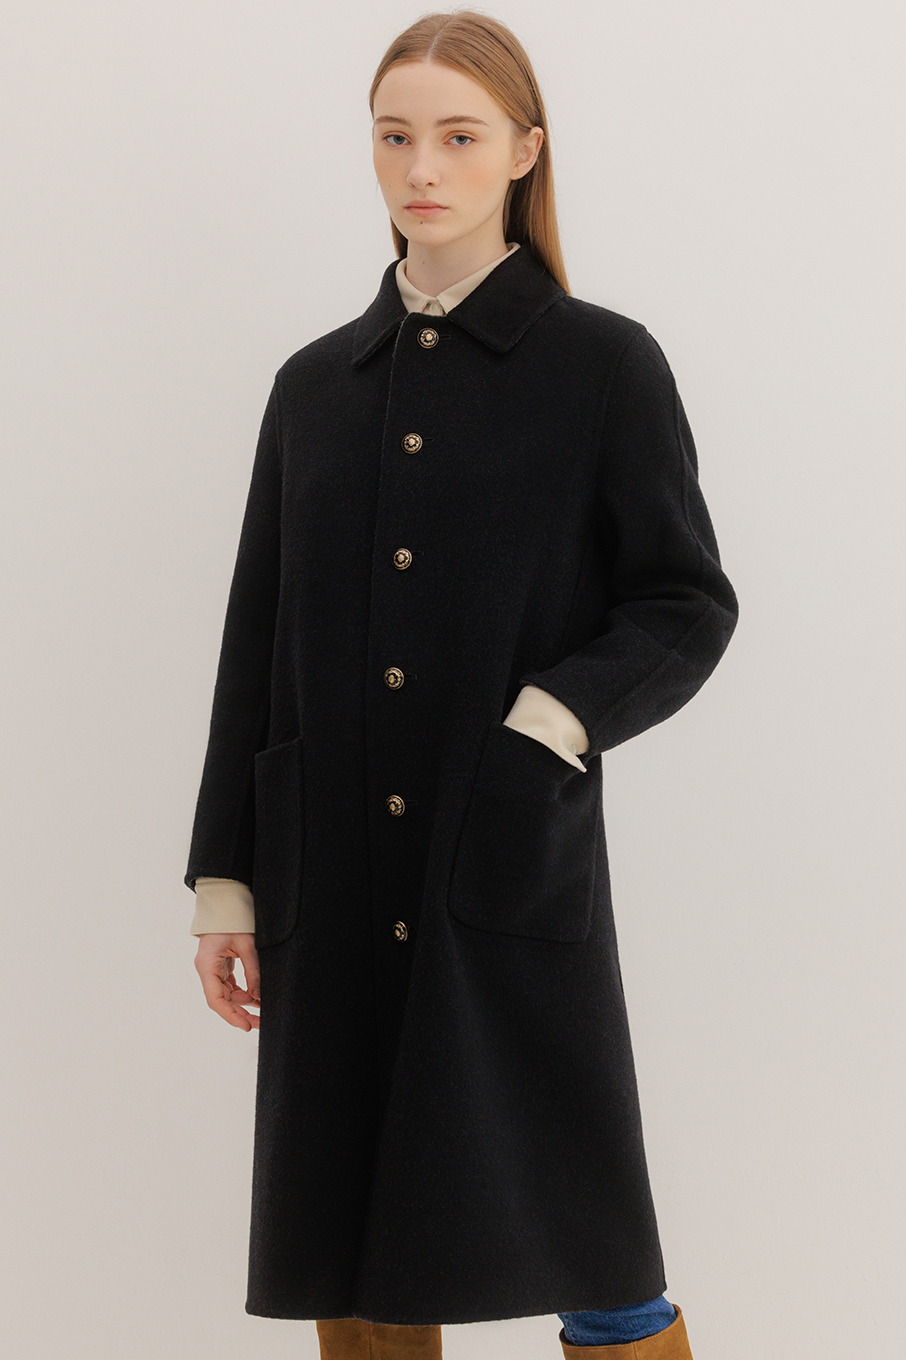 Marizi  coat (Reversible Black &amp; Gray) 2차 판매 완료 3차 리오더